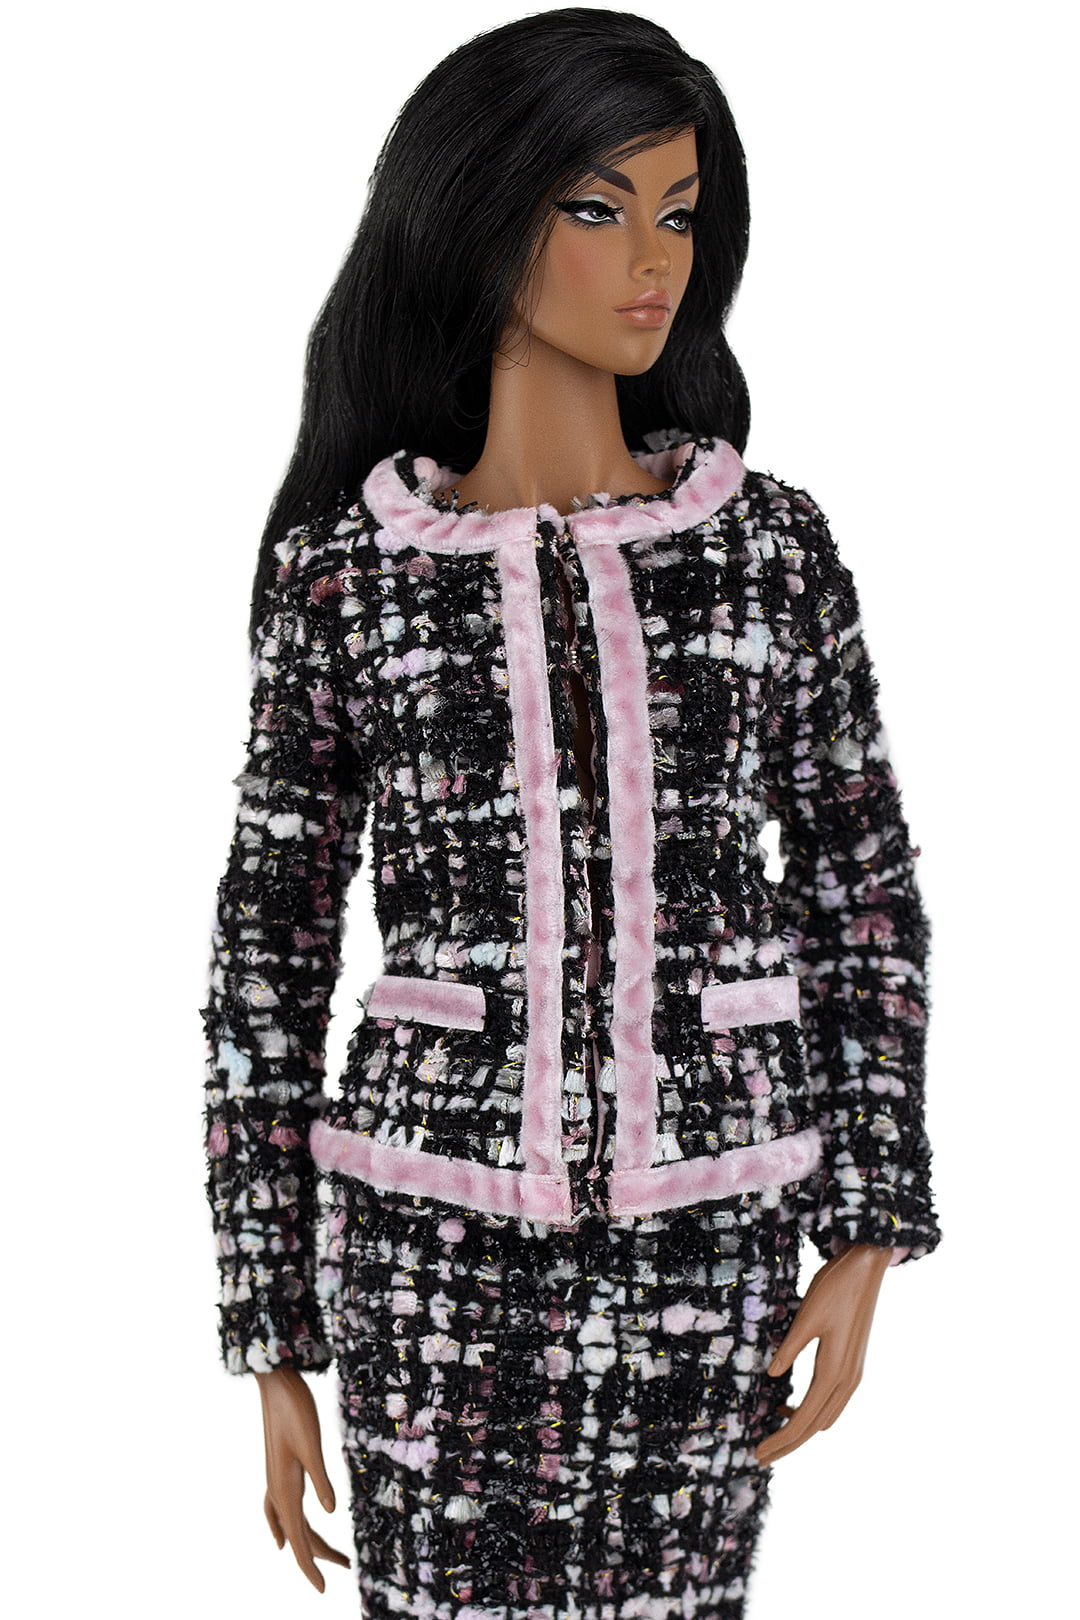 Black and pink multicolored tweed Chanel style jacket {Choose size} Fashion  royalty FR:16 Sybarite Tonner PashaPasha Tender Creation dolls – ELENPRIV  doll fashions